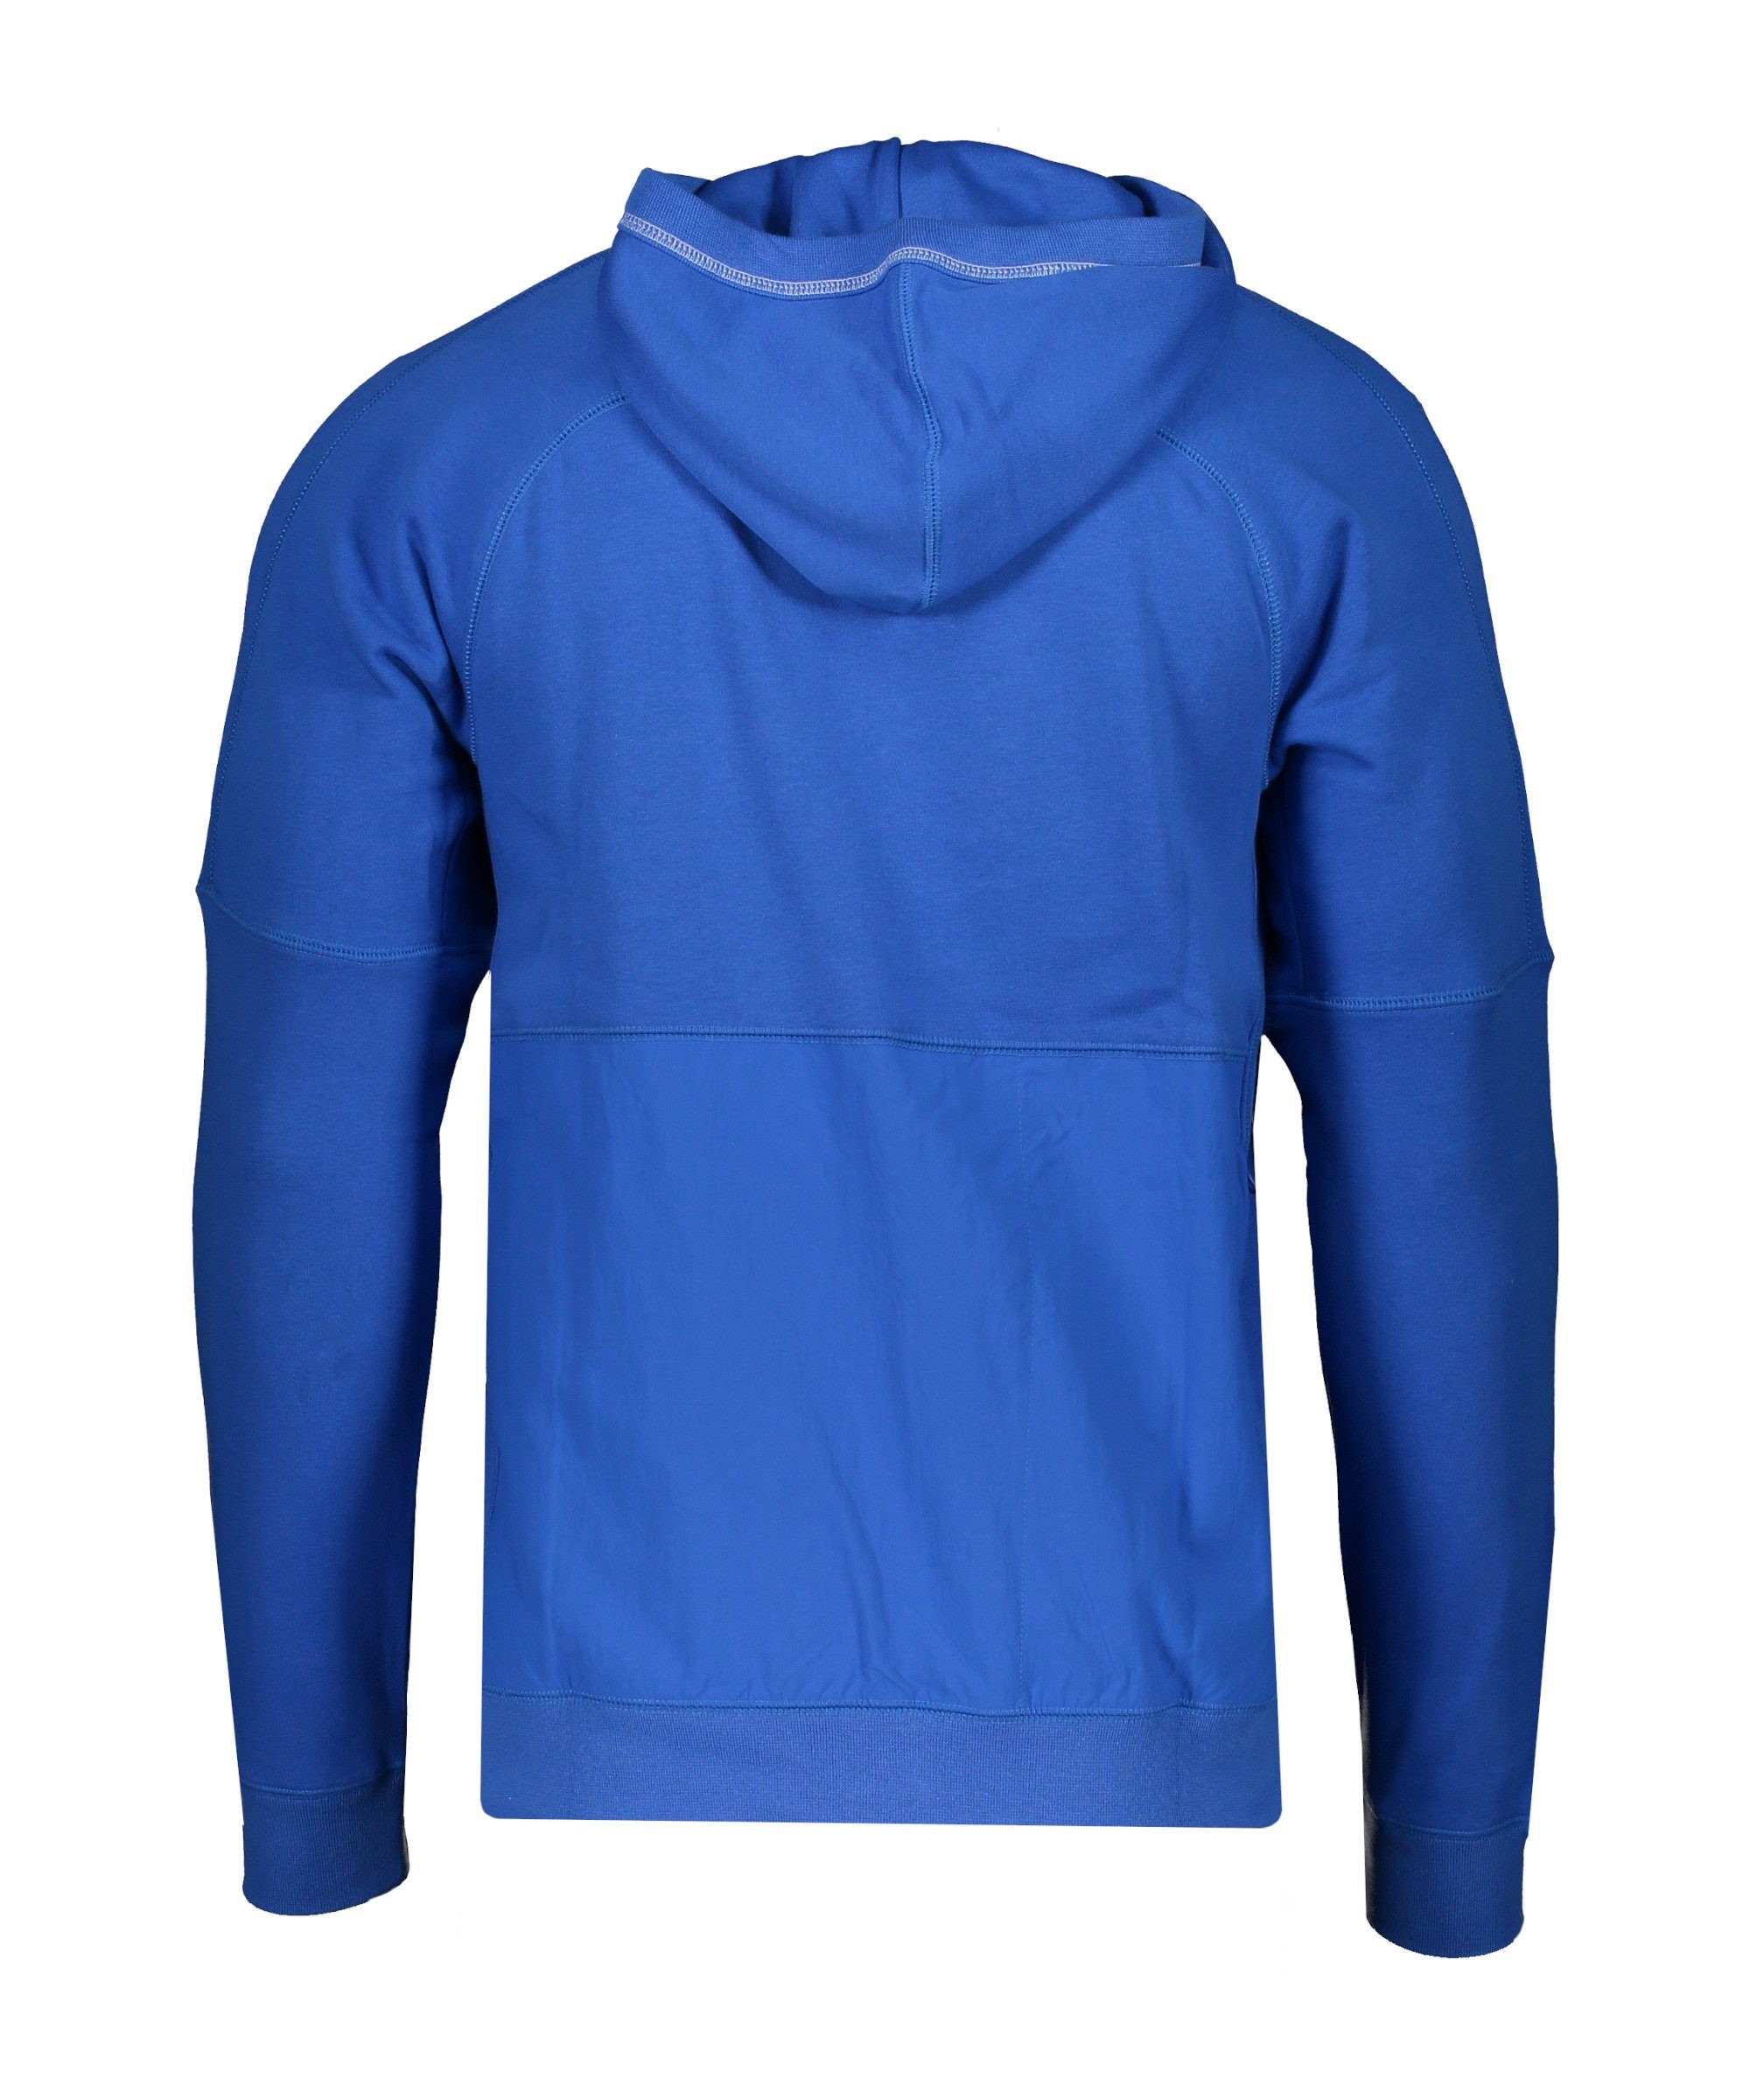 Nike Sweatshirt Strike 22 Express blauweiss Hoody